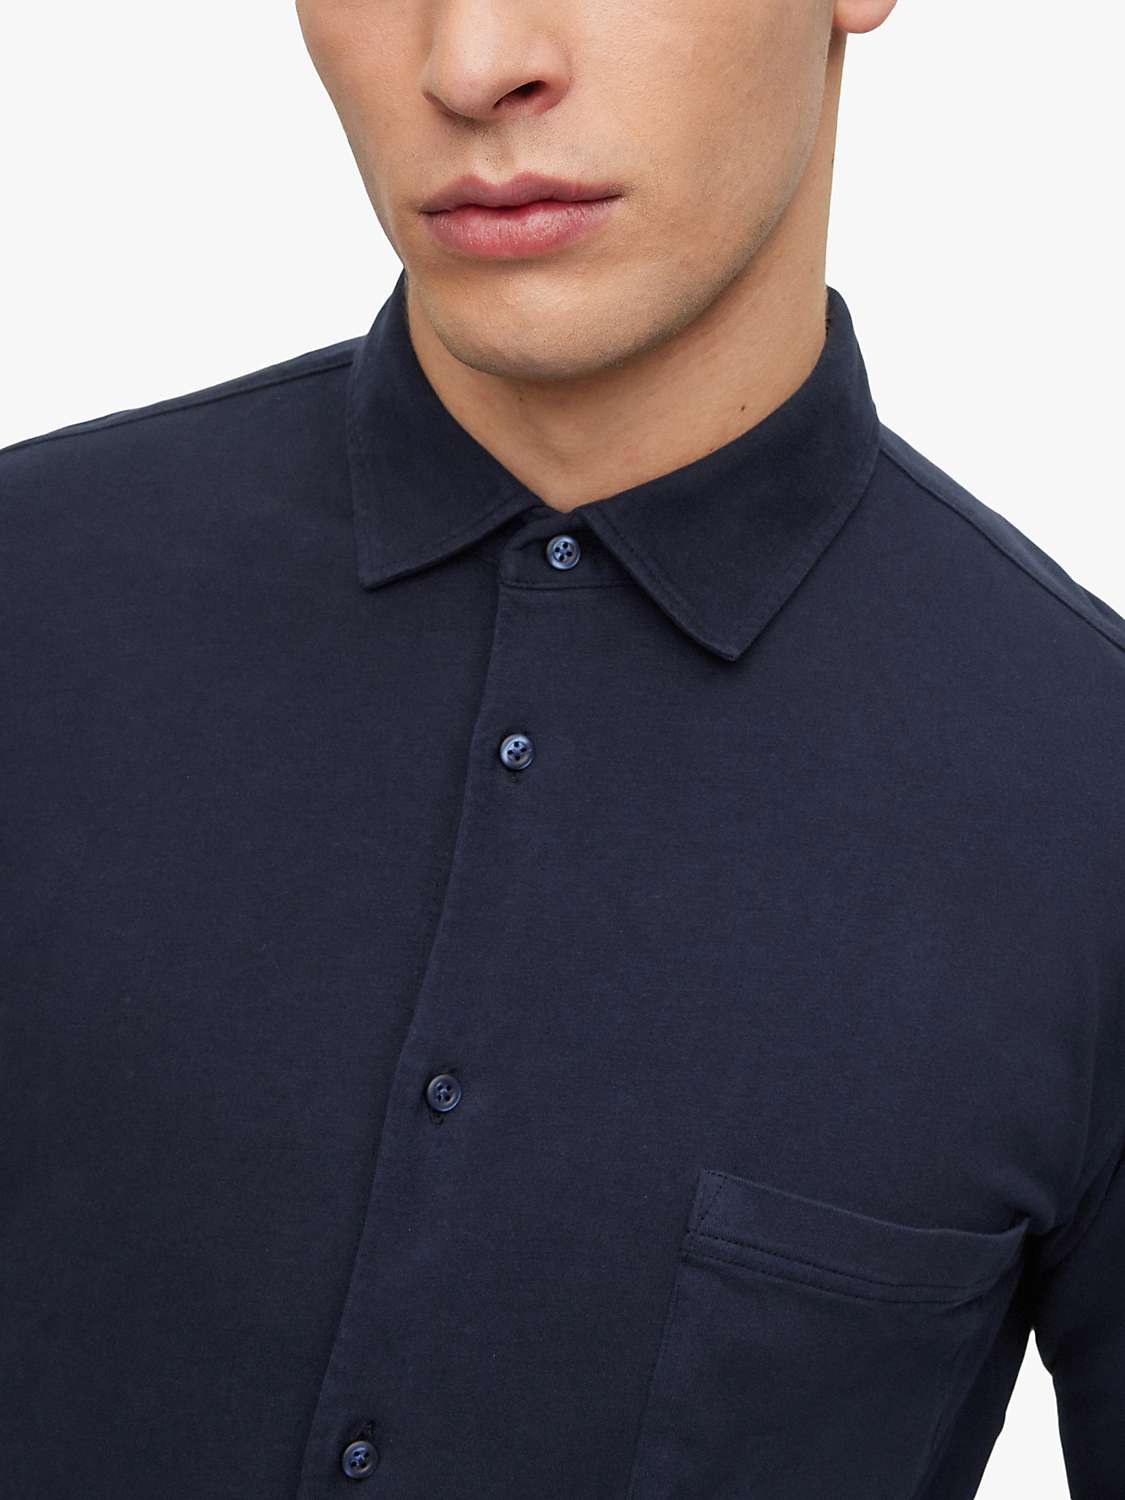 BOSS Mysoft 2 Slim Fit Jersey Cotton Shirt, Dark Blue at John Lewis ...